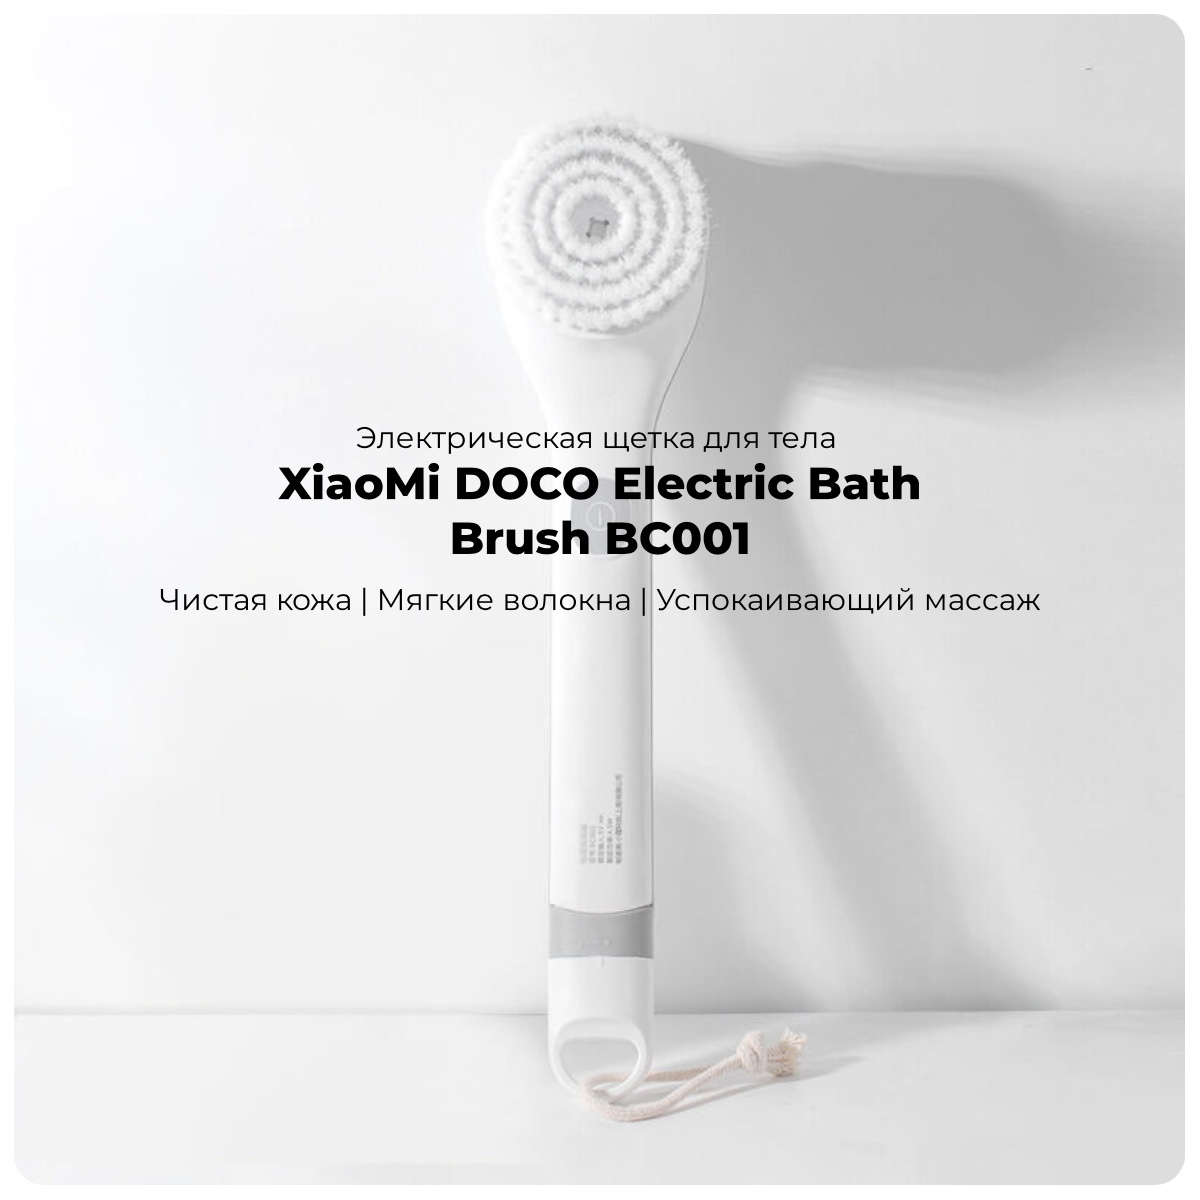 XiaoMi-DOCO-Electric-Bath-Brush-BC001-01